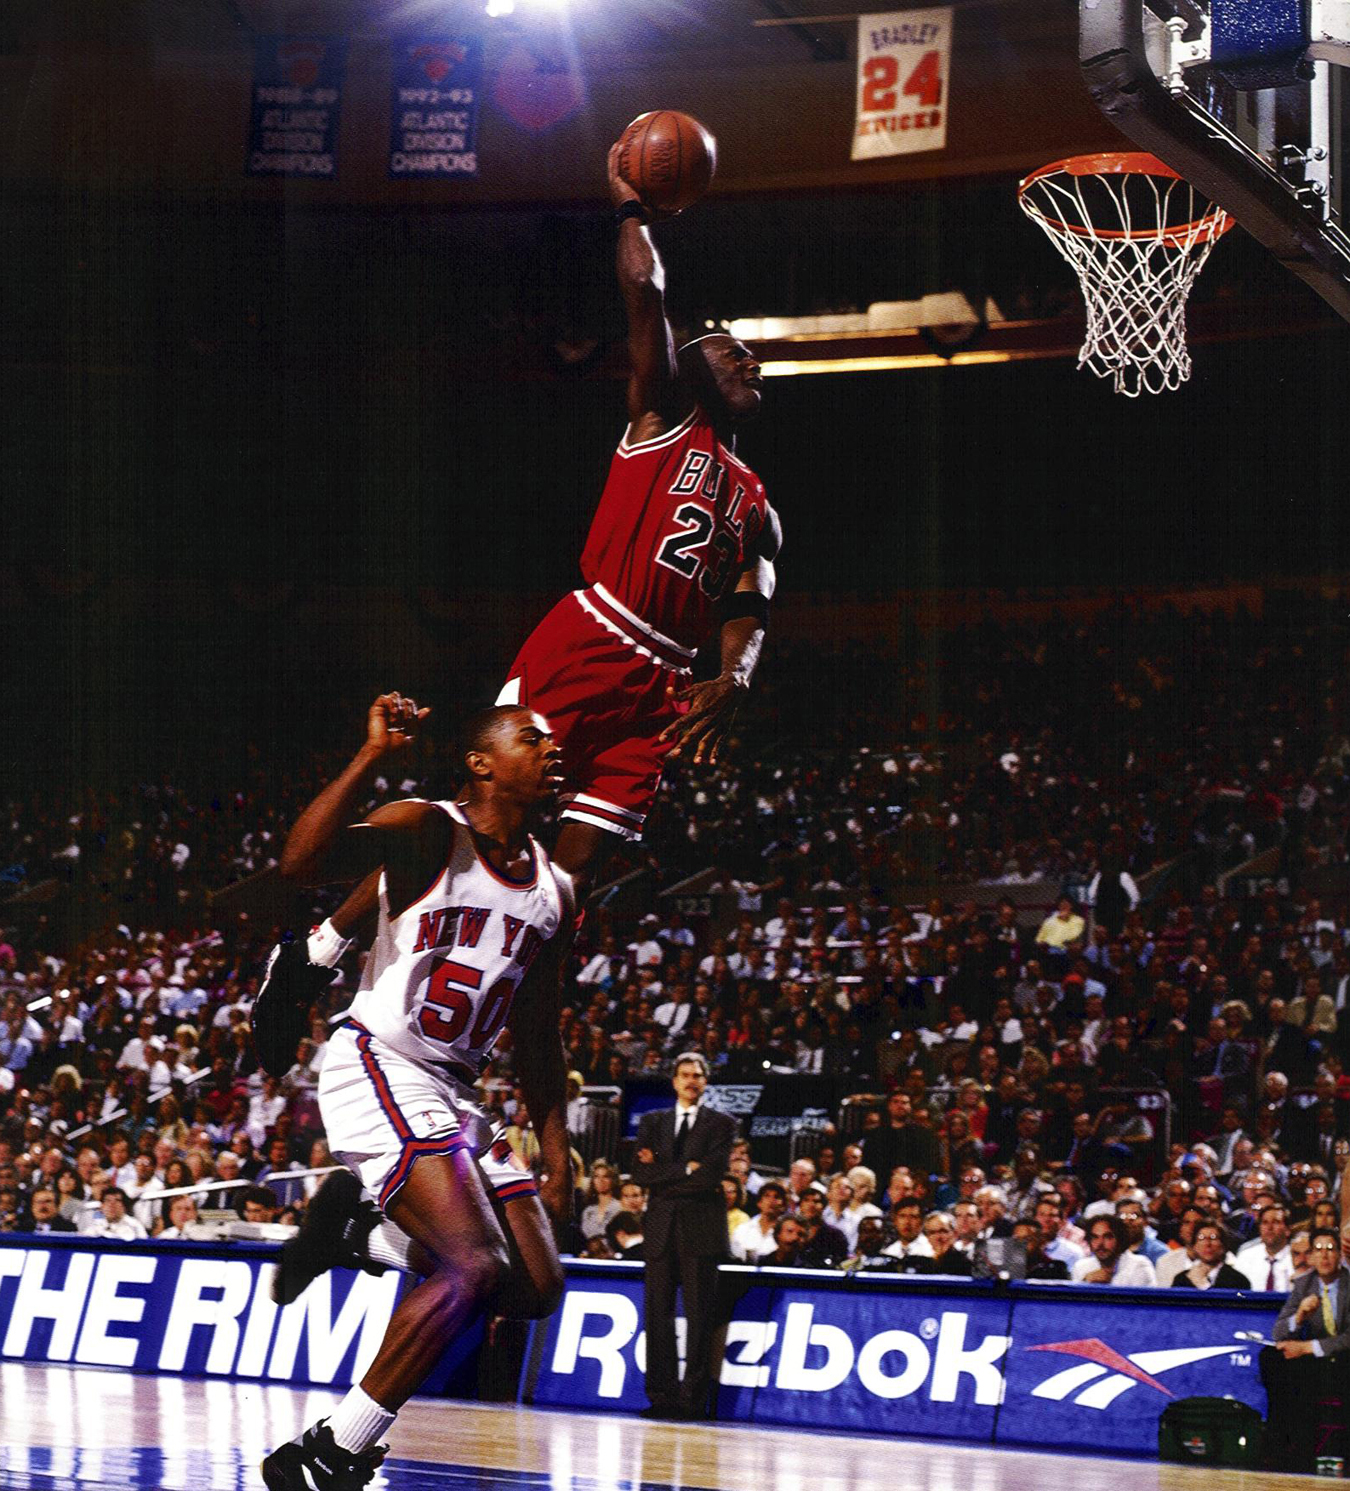 Jordan One of The Best Inspirational Video michael jordan dunk